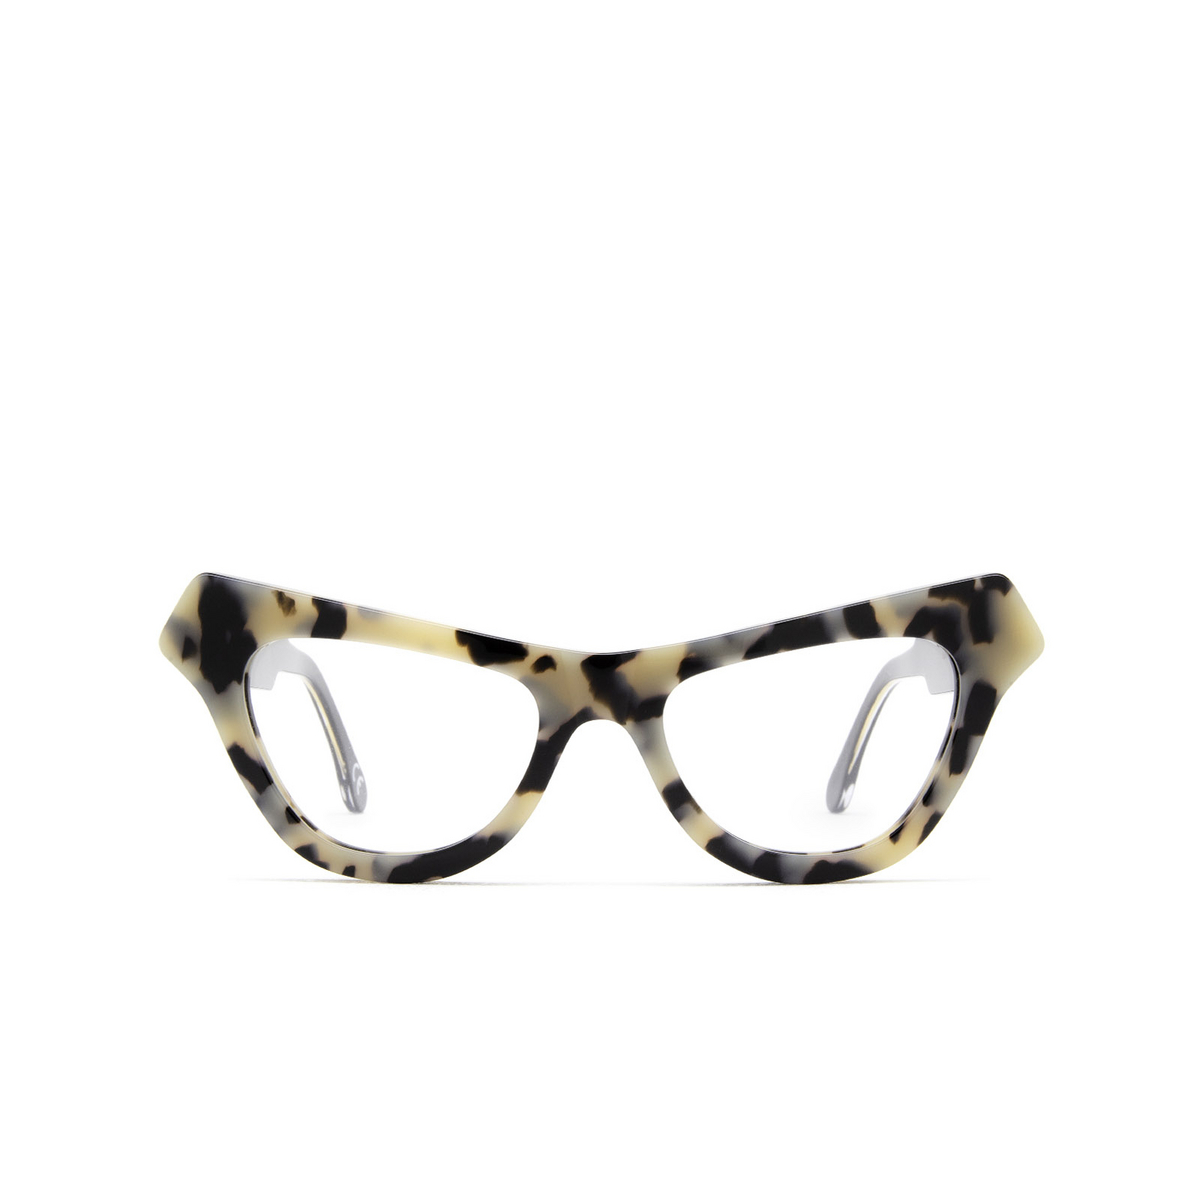 Marni® Irregular Eyeglasses: Jeju Island color Puma Ygm - front view.